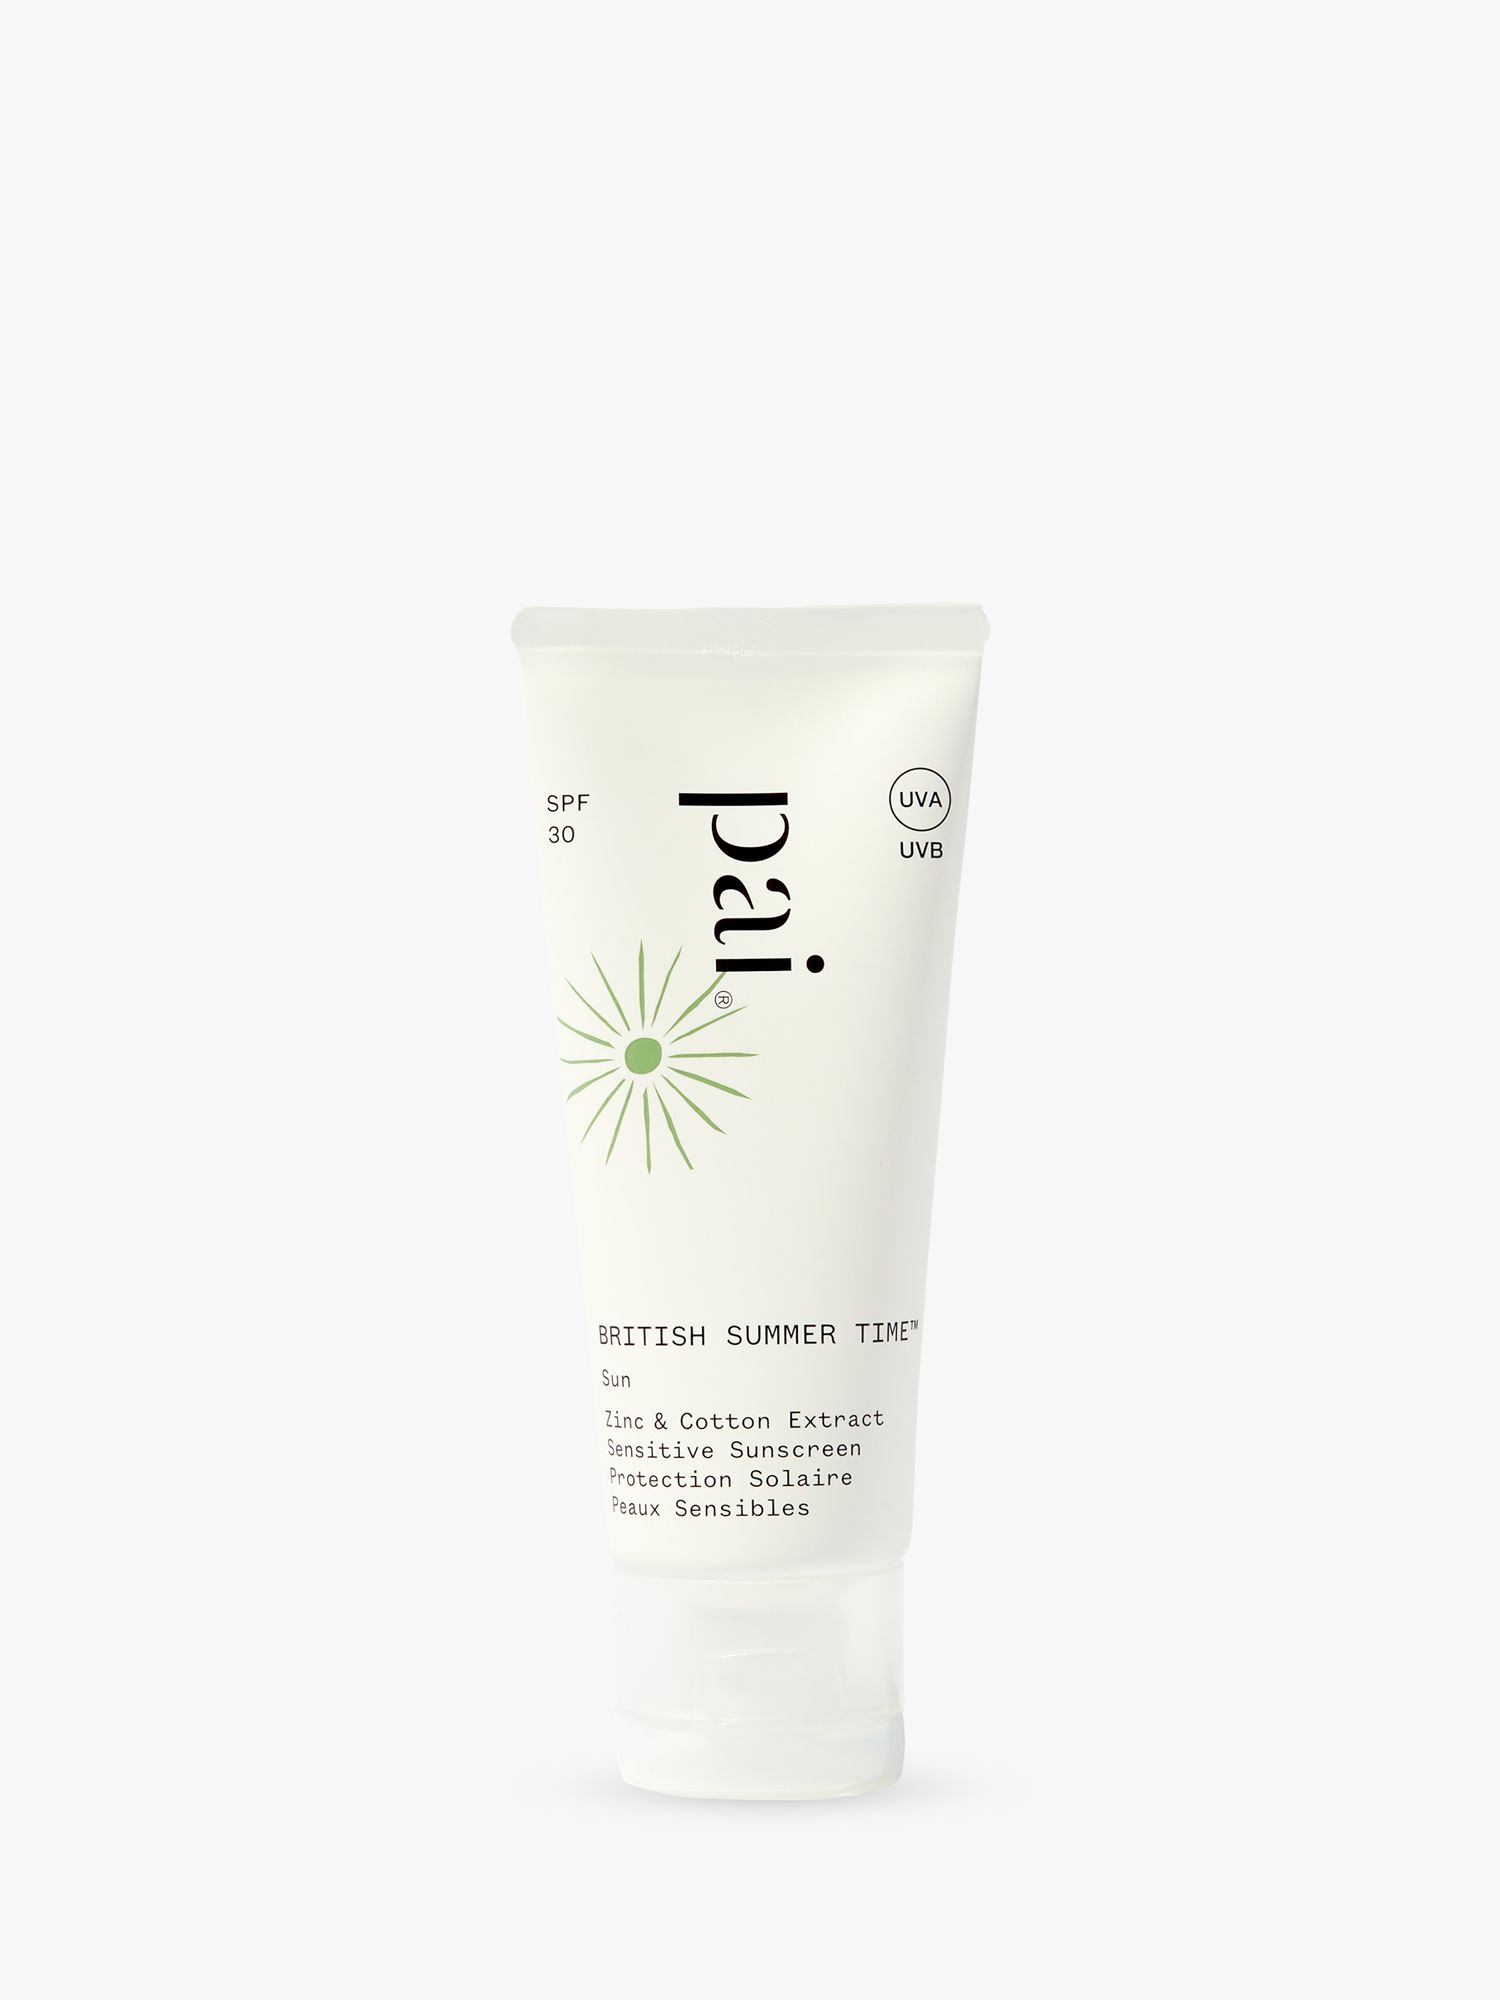 Pai British Summer Time, Zinc & Cotton Extract SPF30 Sensitive Sunscreen, 40ml